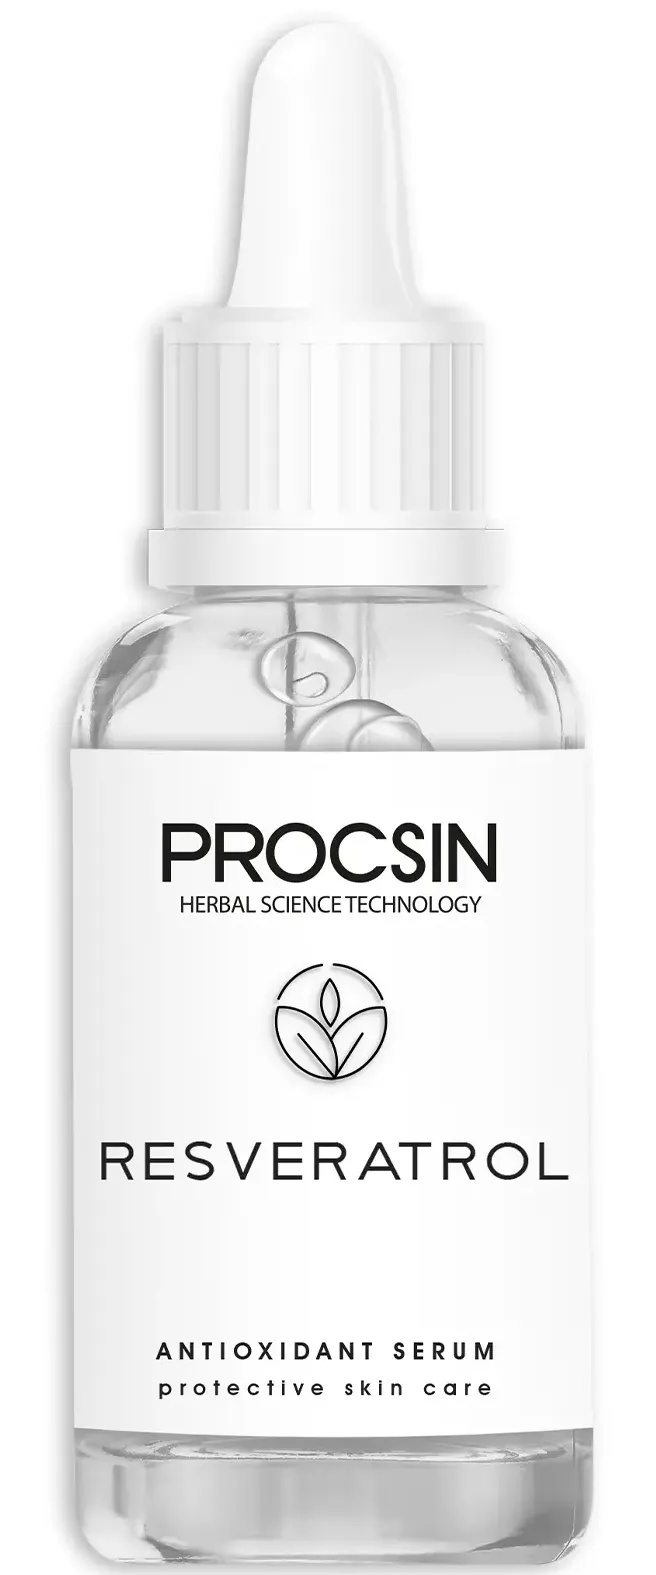 Procsin Resveratrol Serum: